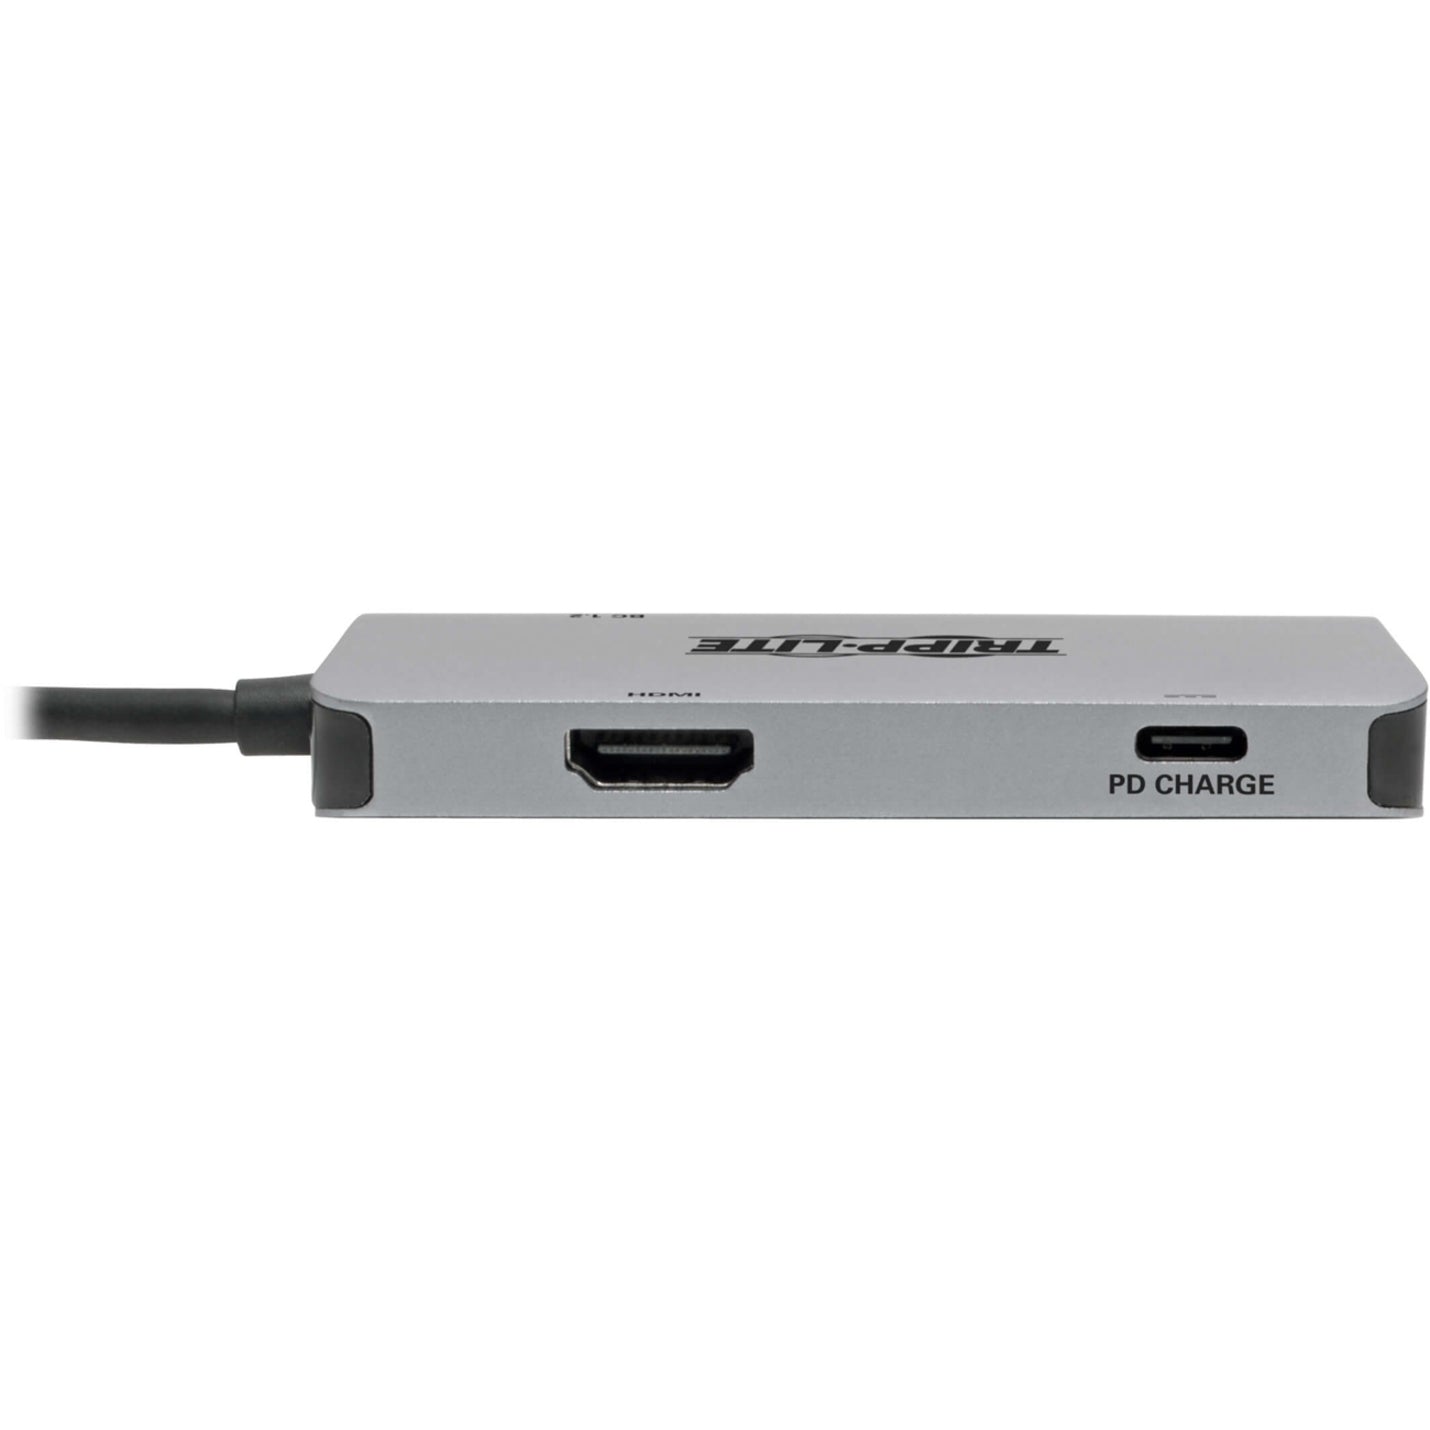 Tripp Lite U444-06N-H3U-C USB 3.1 C Adapter with PD Charging, Gray - HDMI/USB A/V Adapter